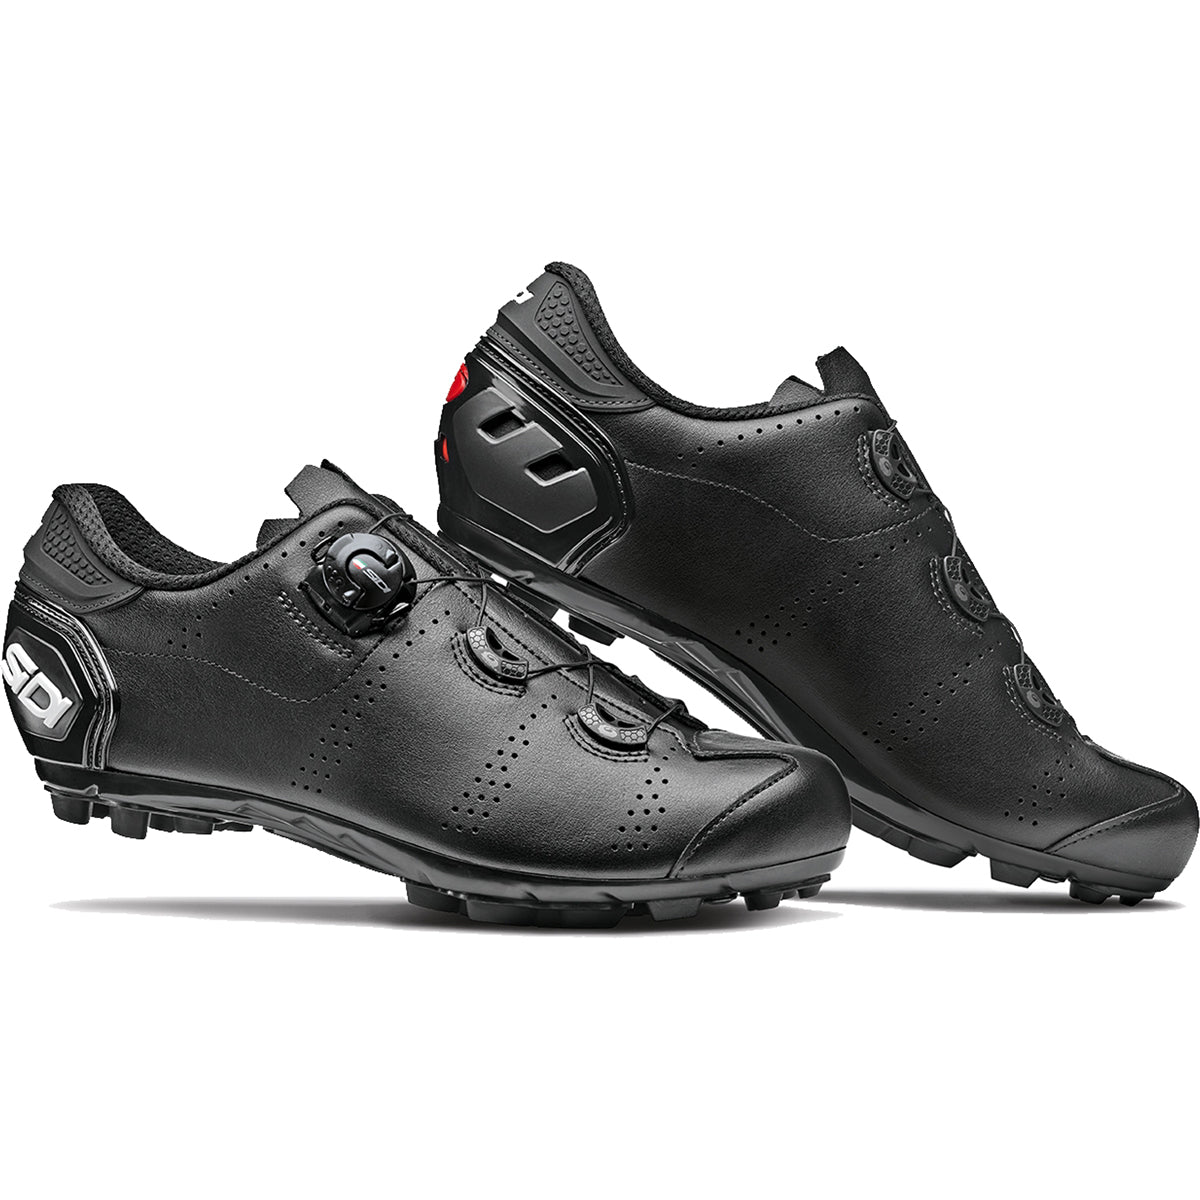 Sidi Speed Mountain Bike Shoes CLOSEOUT - Black/Black